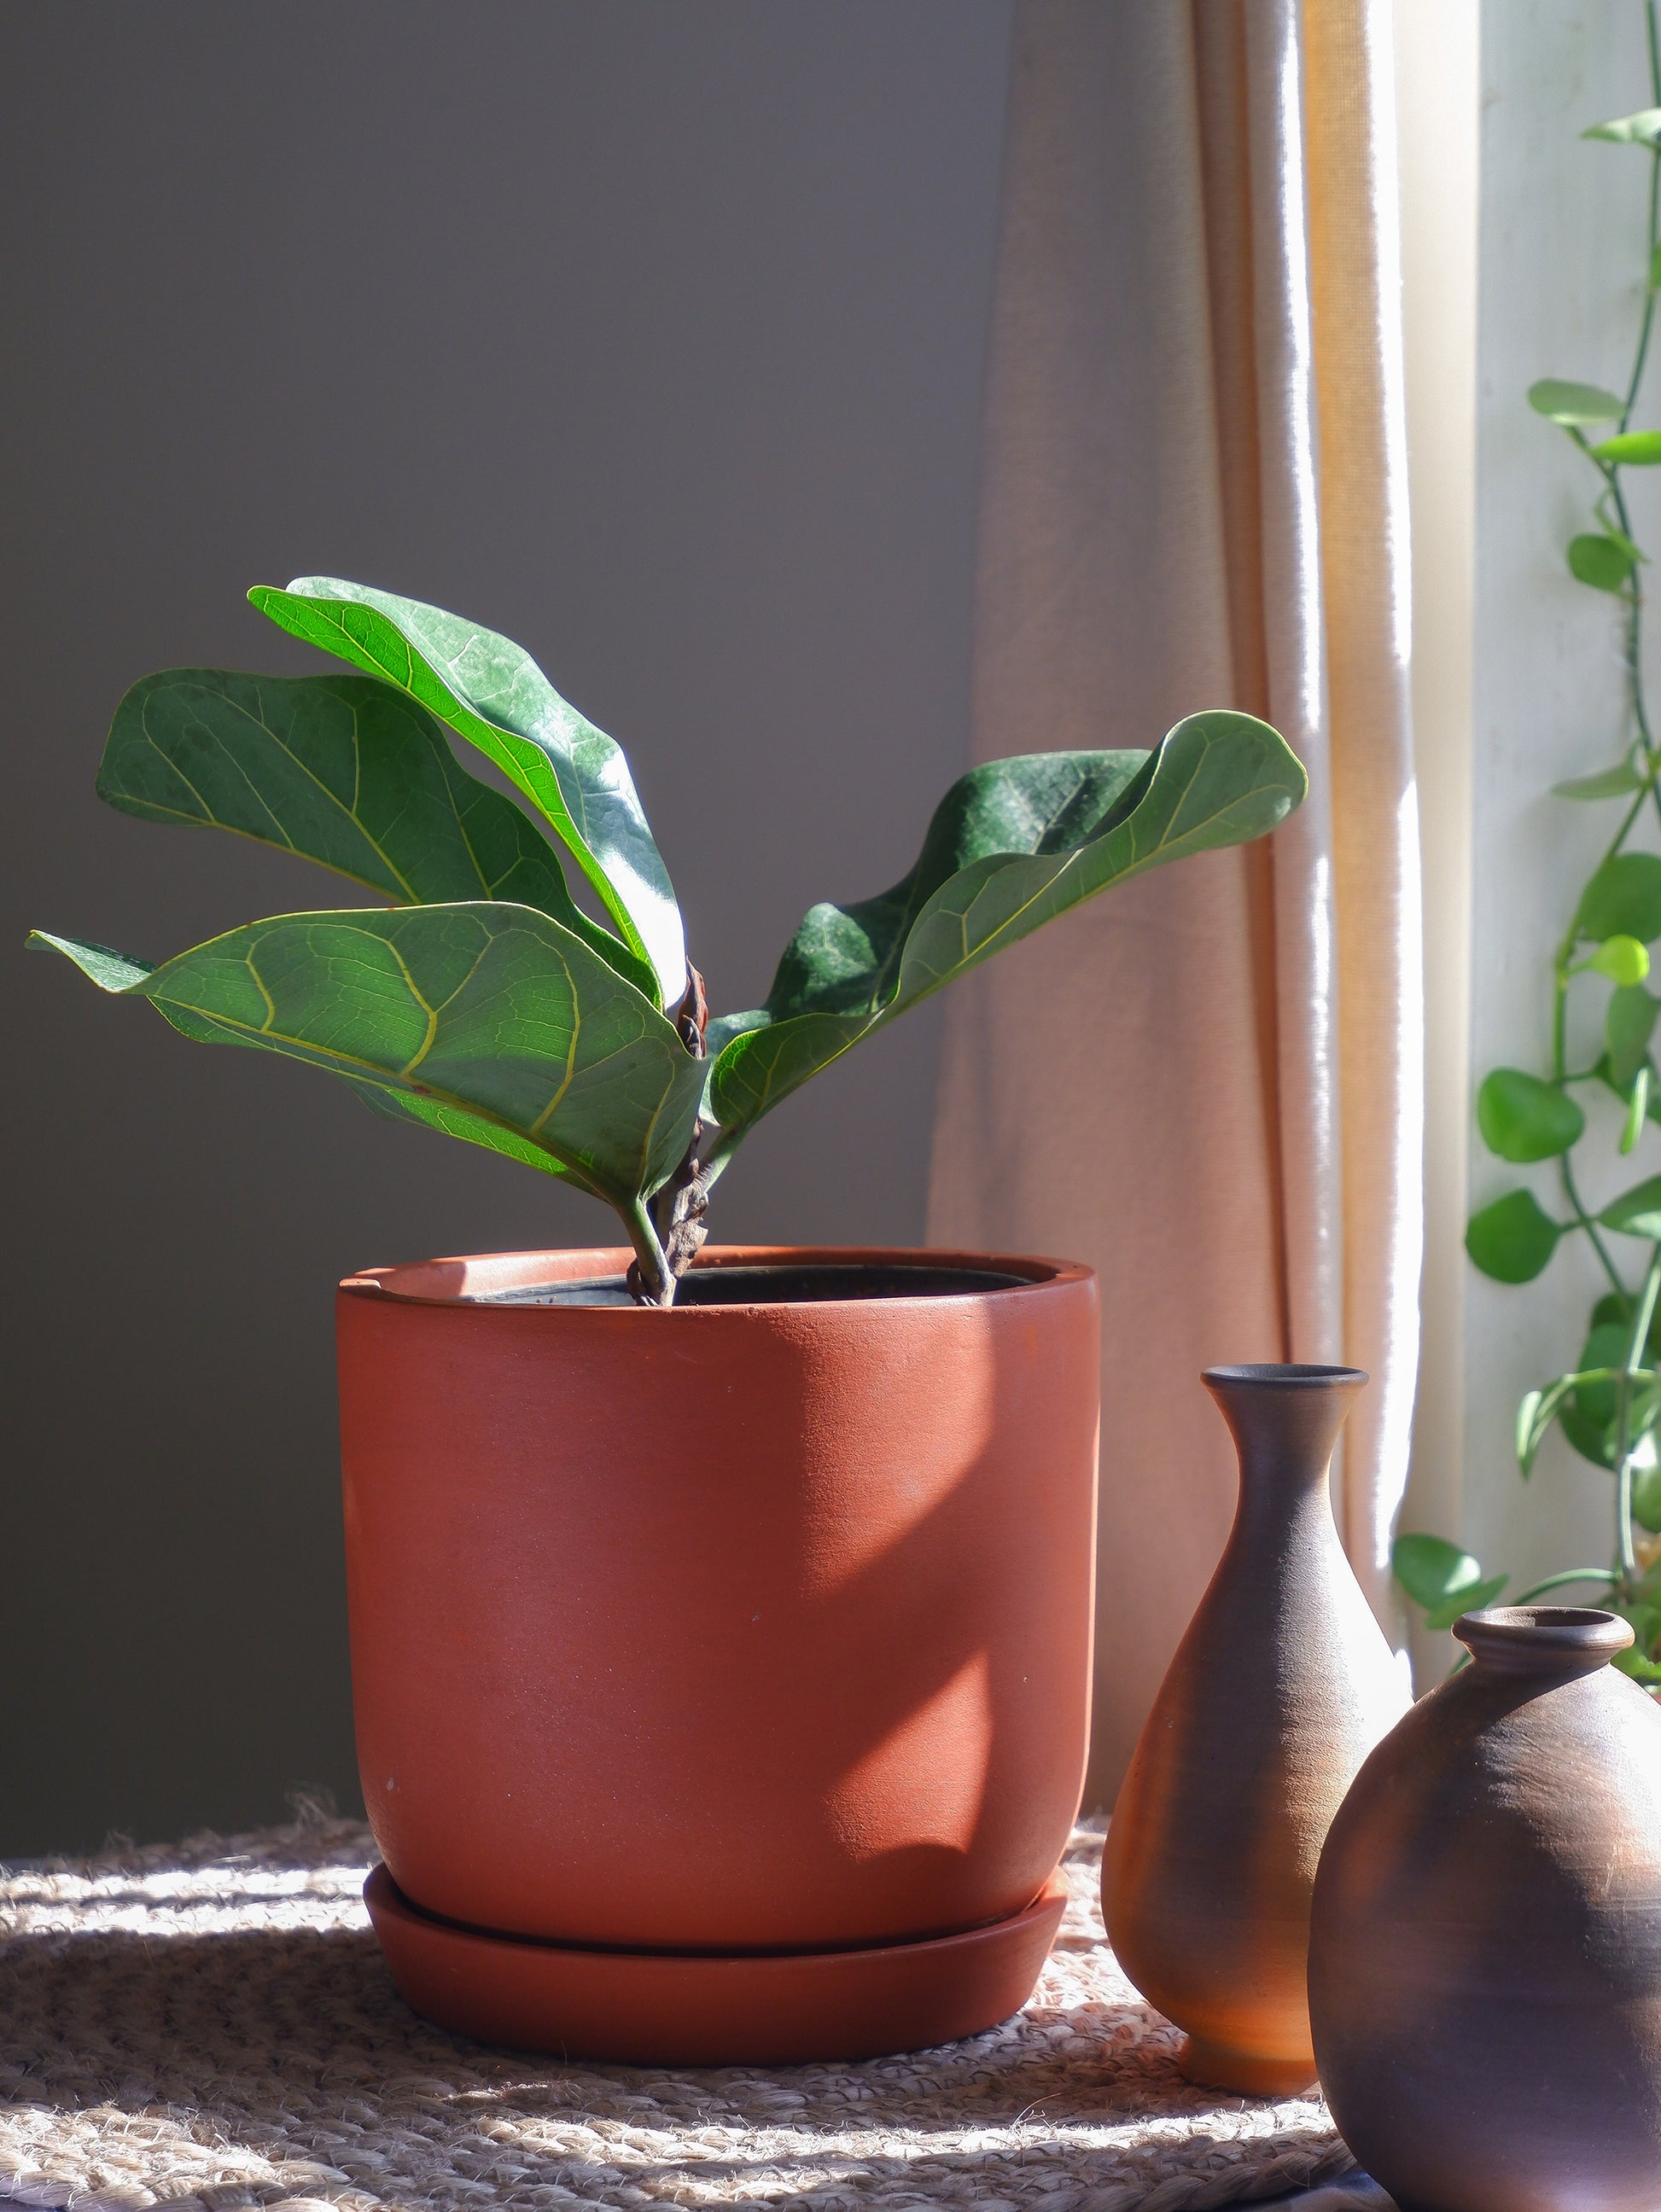 Shop online best Terracotta Planters for indoor plants. Delivered all India